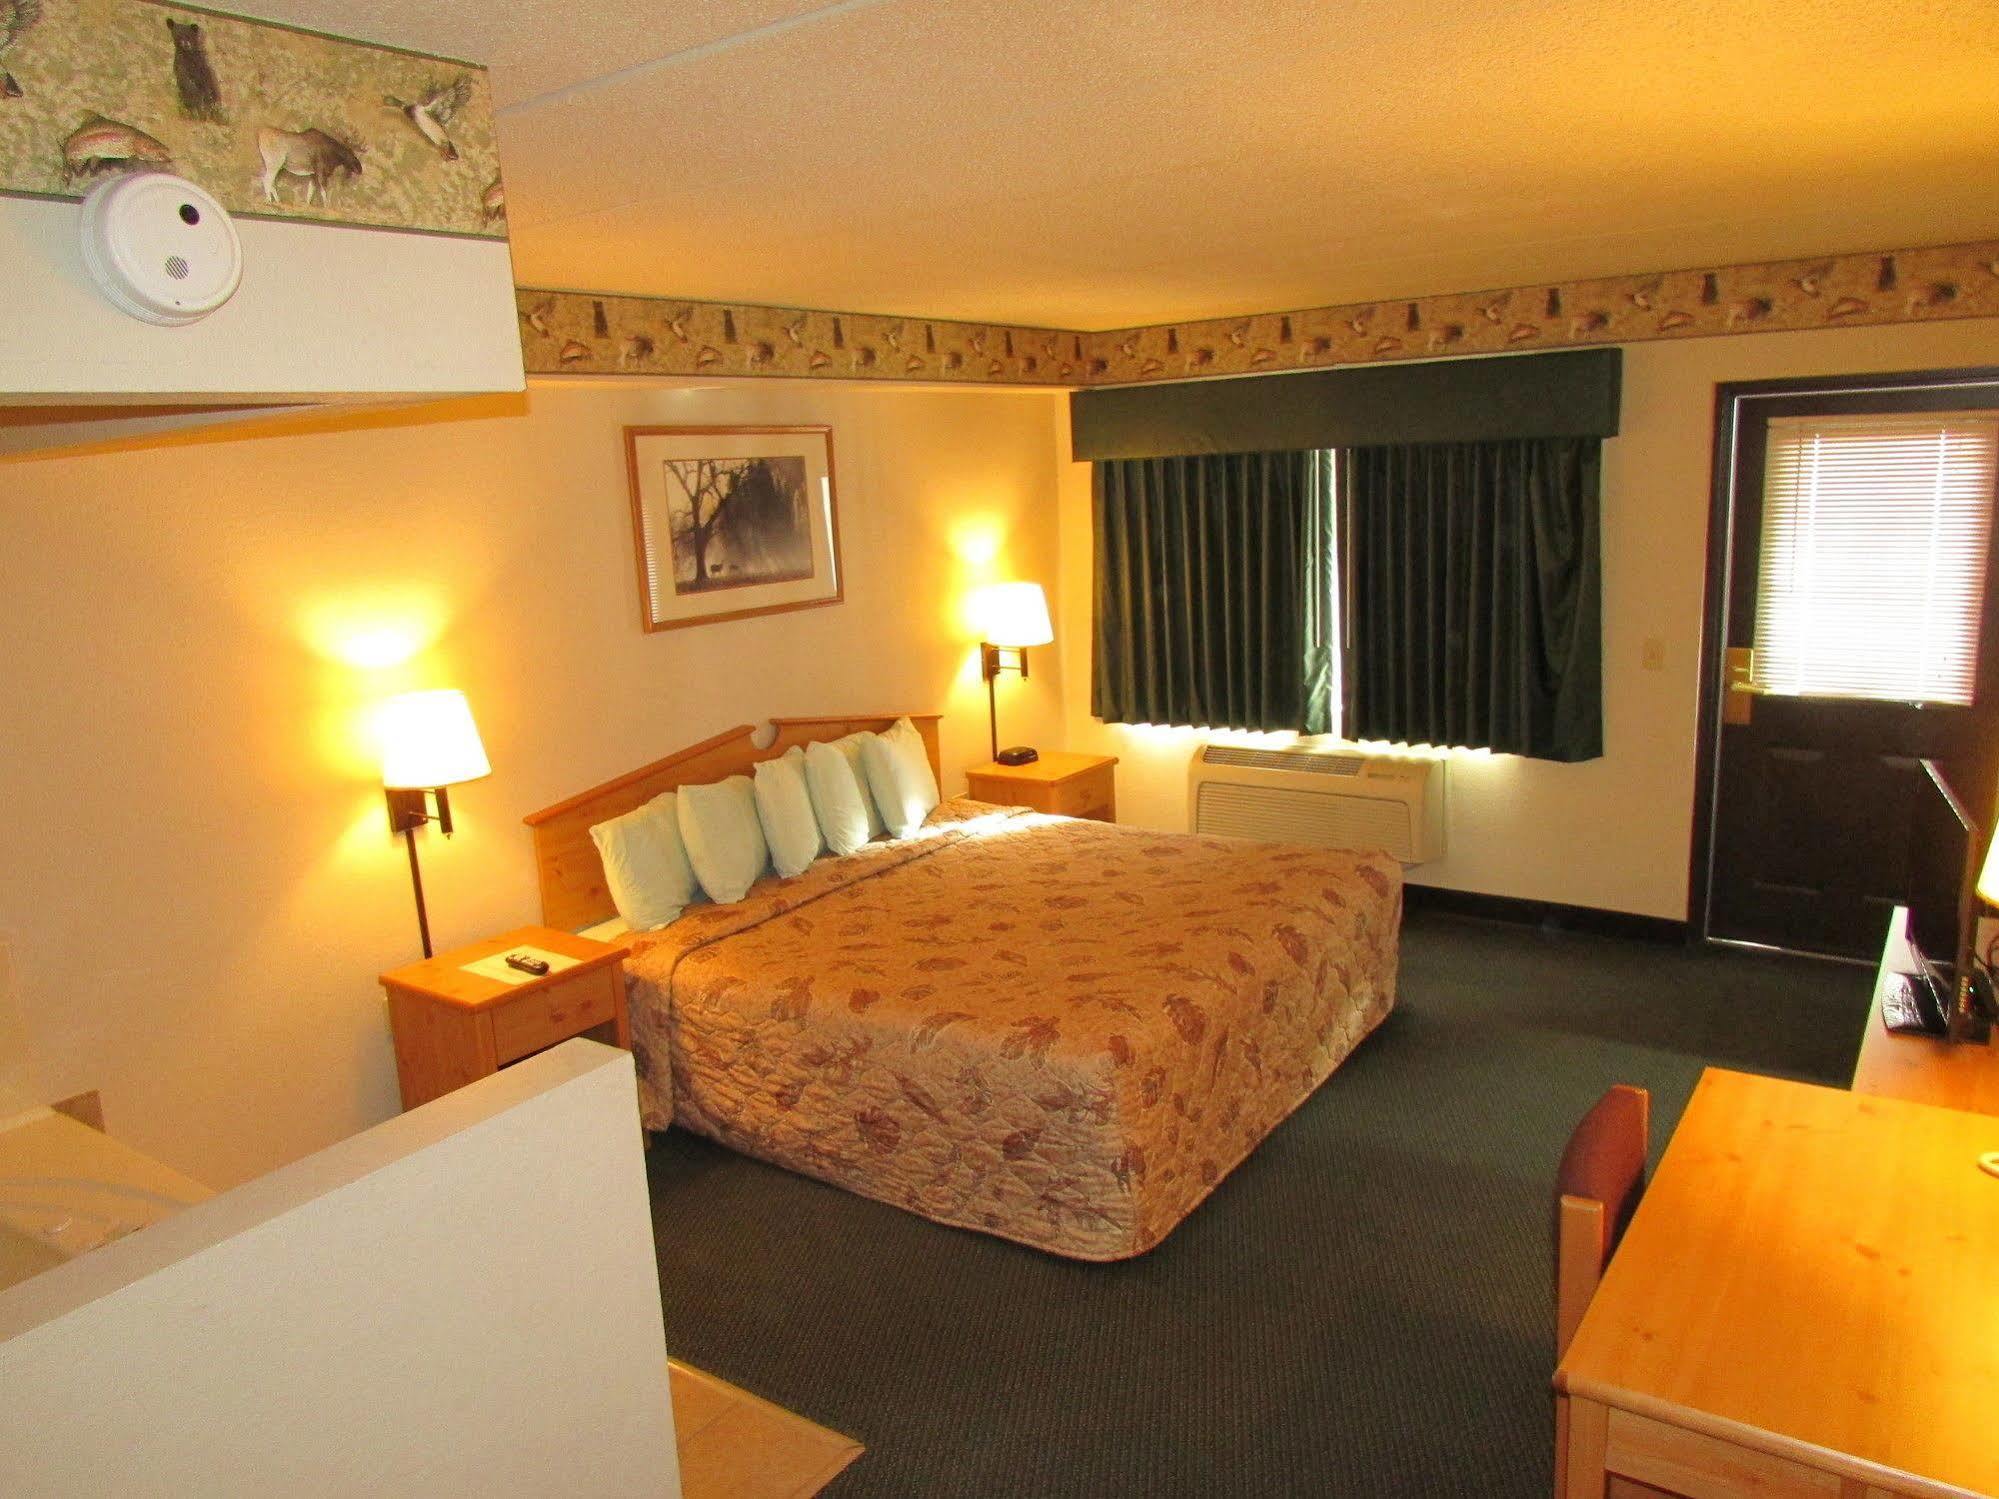 Amerivu Inn & Suites Shell Lake エクステリア 写真